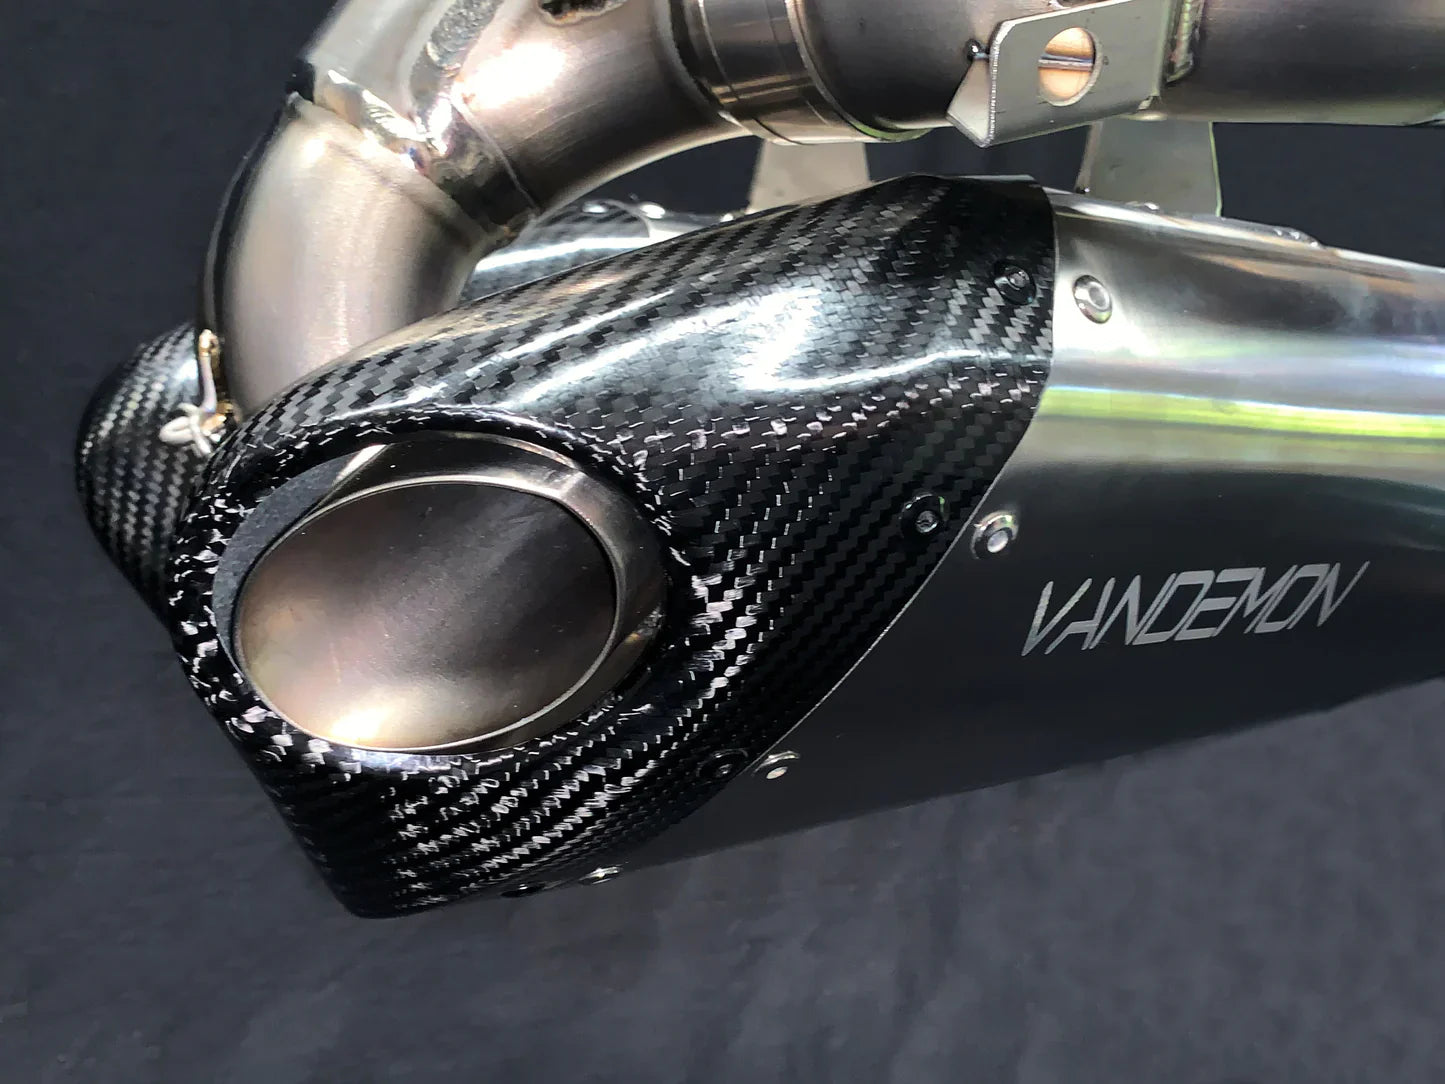 Vandemon Ducati Panigale 899,959,1199,1299 Titanium Belly Exhaust System 2011-18   DUC129TIEXBELA